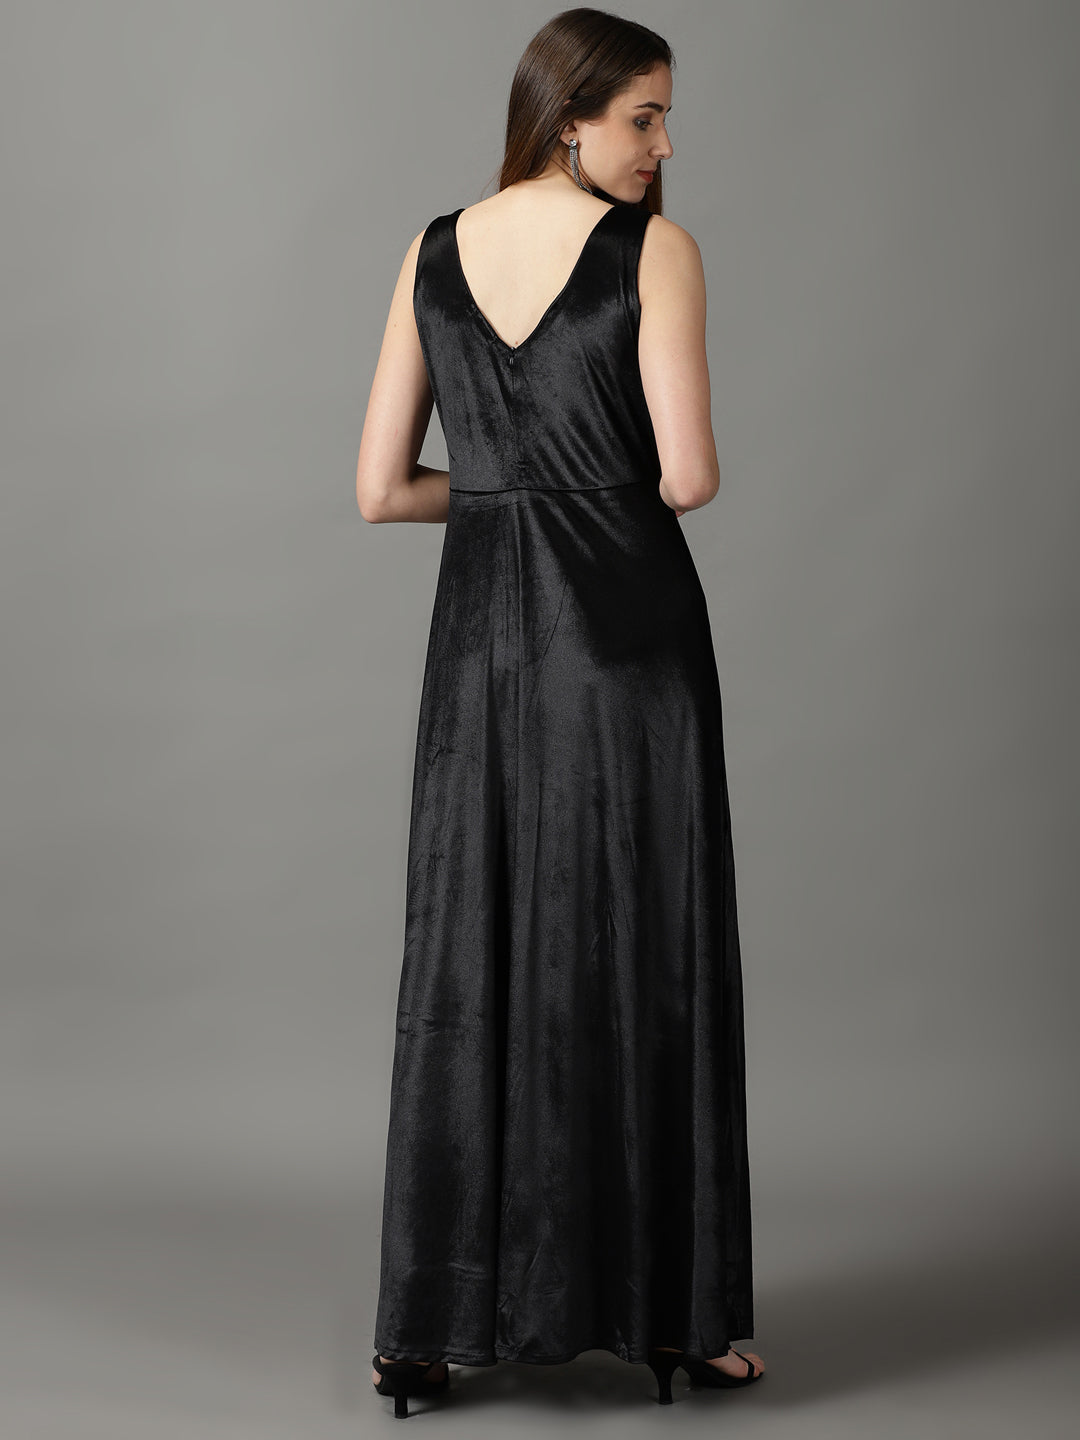 Women's Black Embellished Fit and Flare Dress